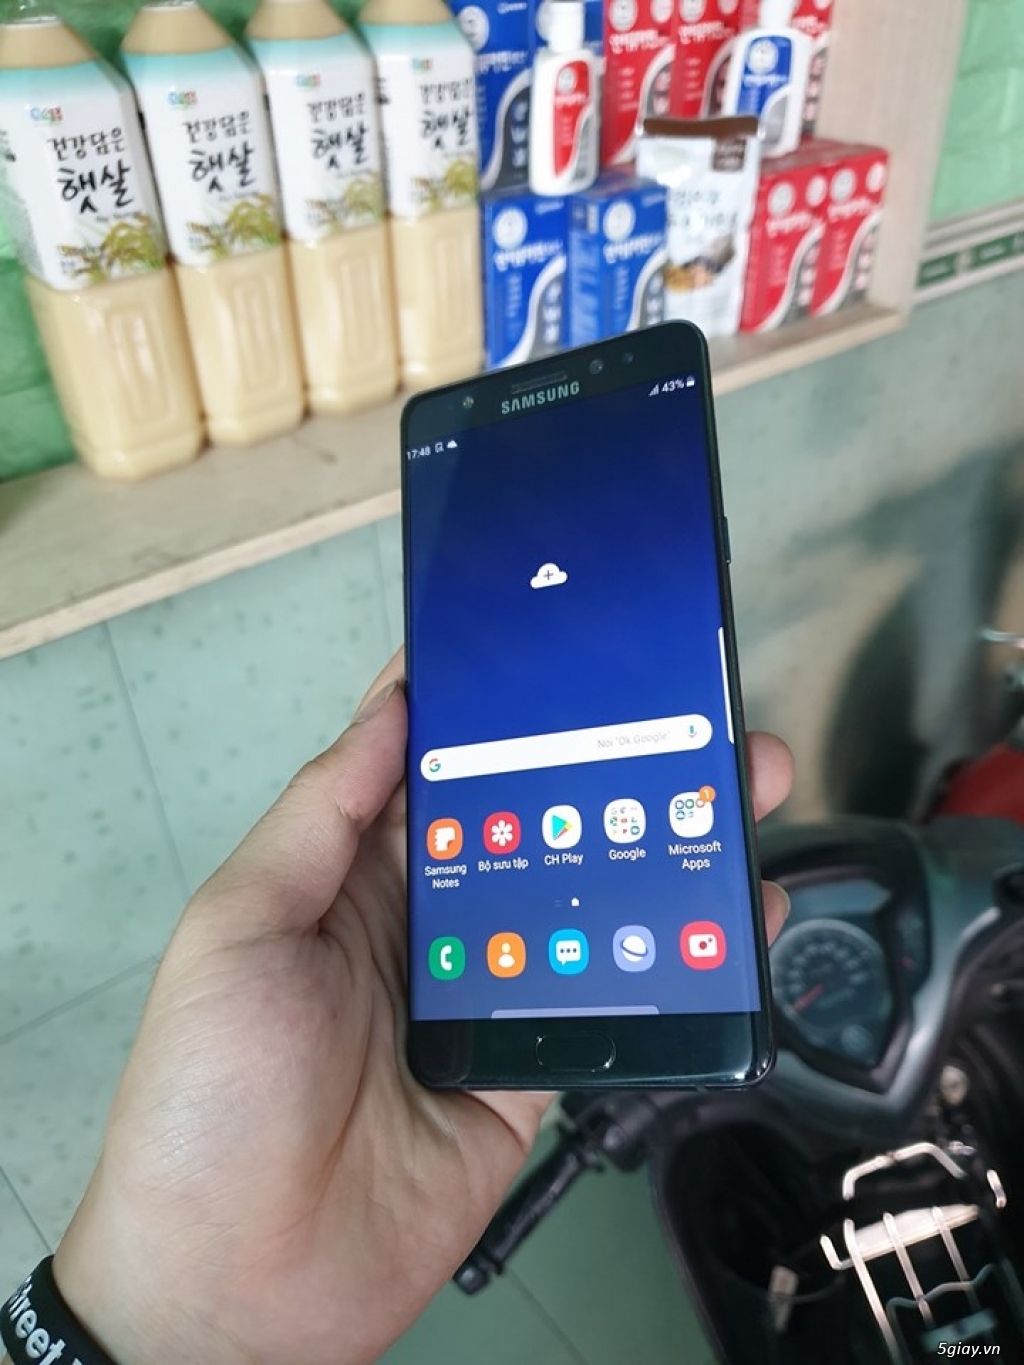 Samsung Galaxy Note FE VN 64gb màu đen likenew - 4